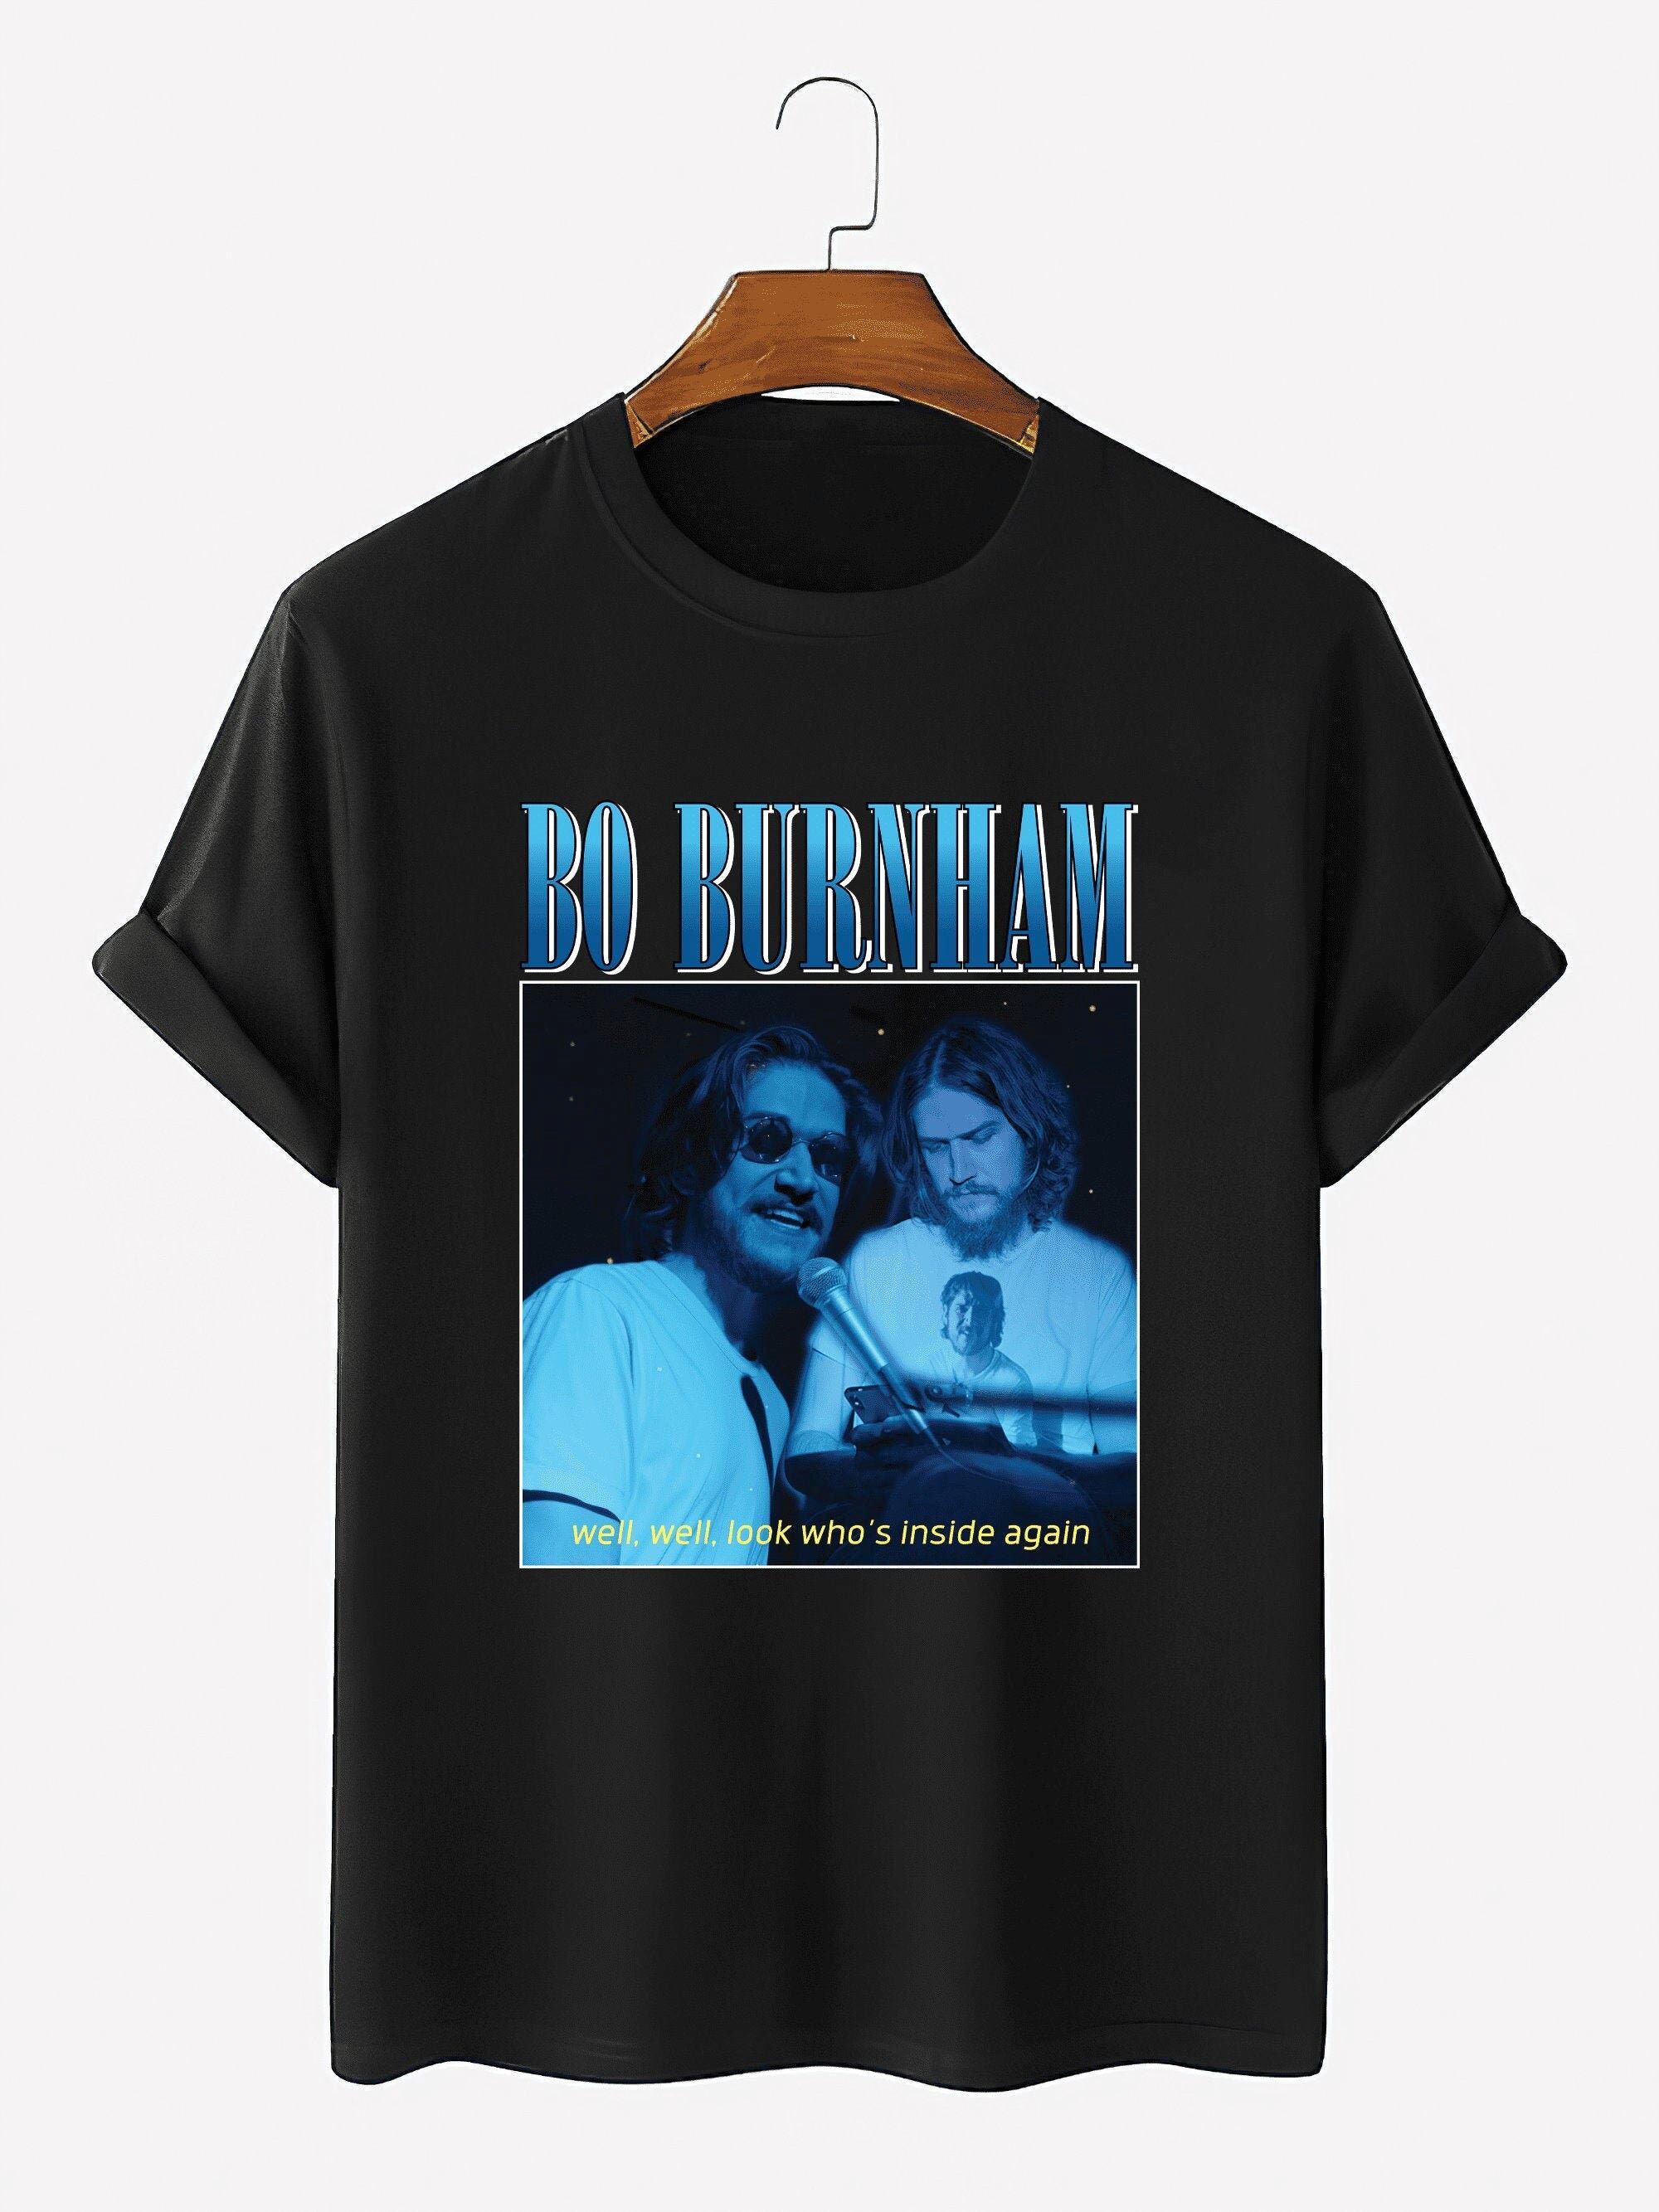 Special Bo Burnham T-shirt Bo Burnham Inside T-shirt Welcome To The Internet Shirt Well Well Look Who's Inside Again T-shirt 